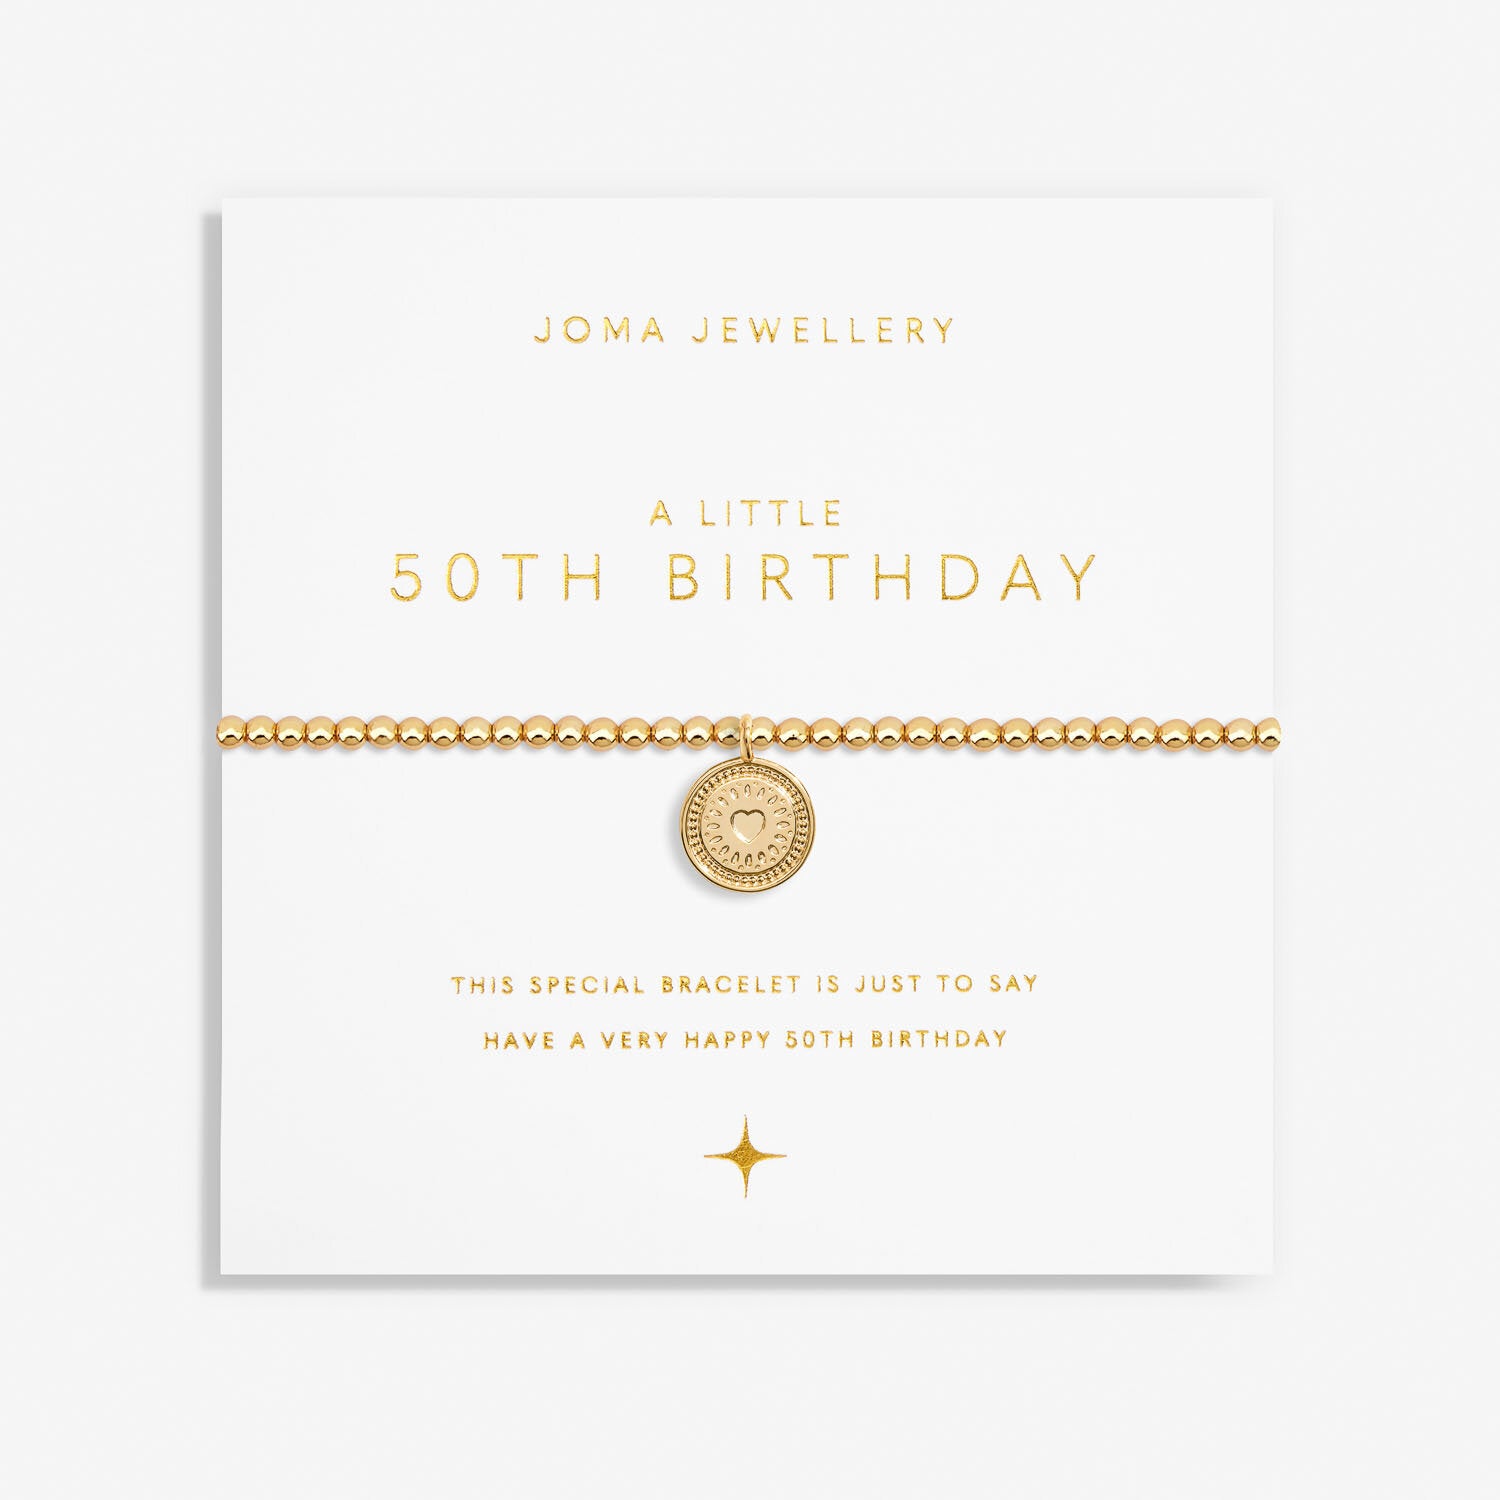 A Little '50th Birthday' Bracelet - Joma Jewellery